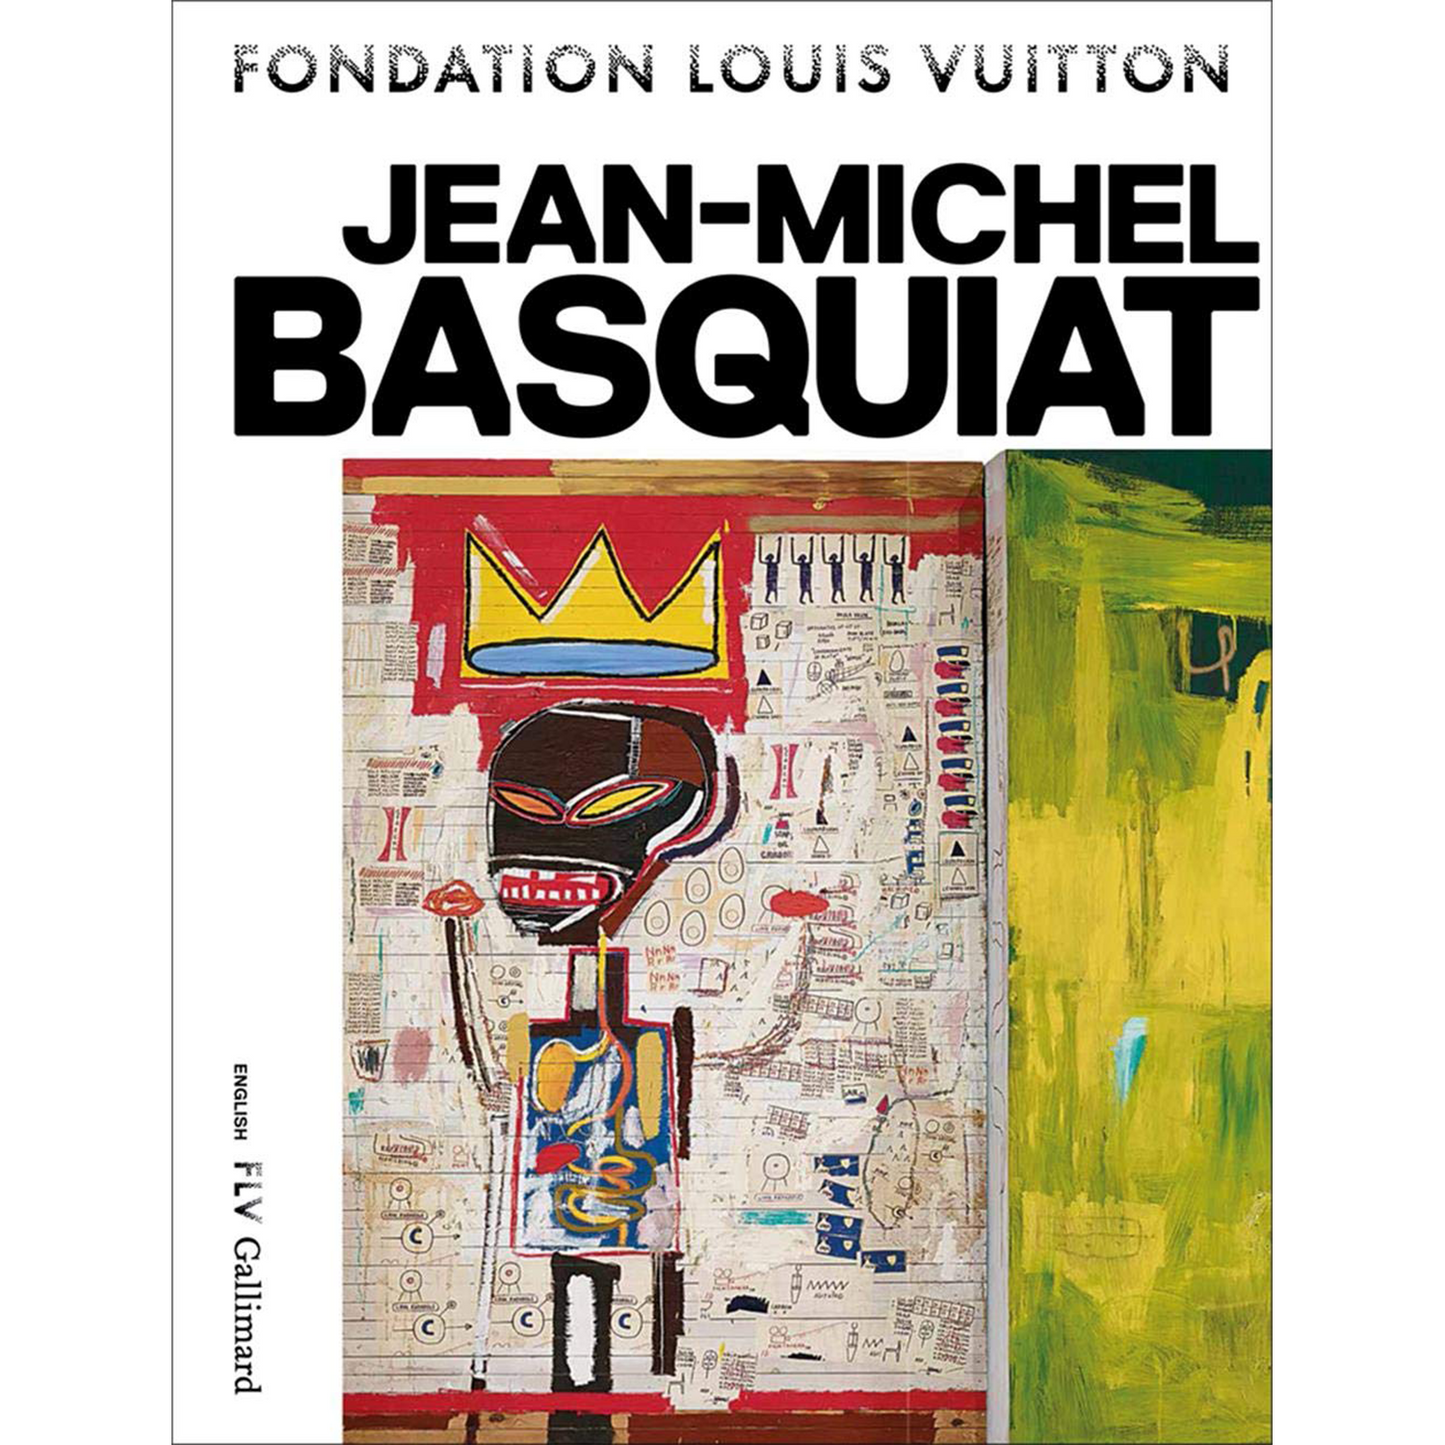 Jean-Michel Basquiat (Hardcover) (Foundation Louis Vuitton)